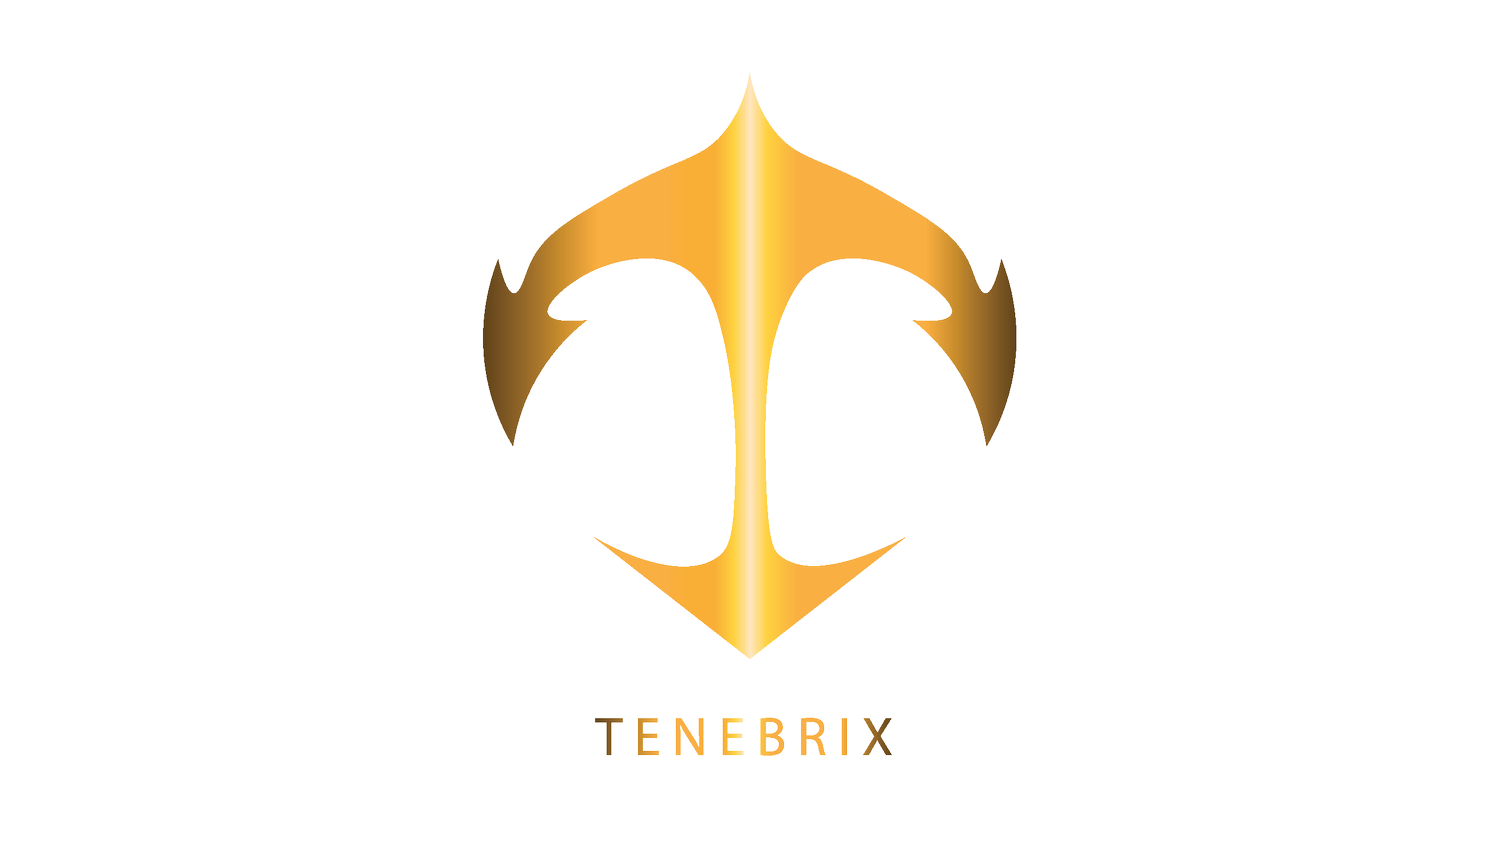 Tenebrix